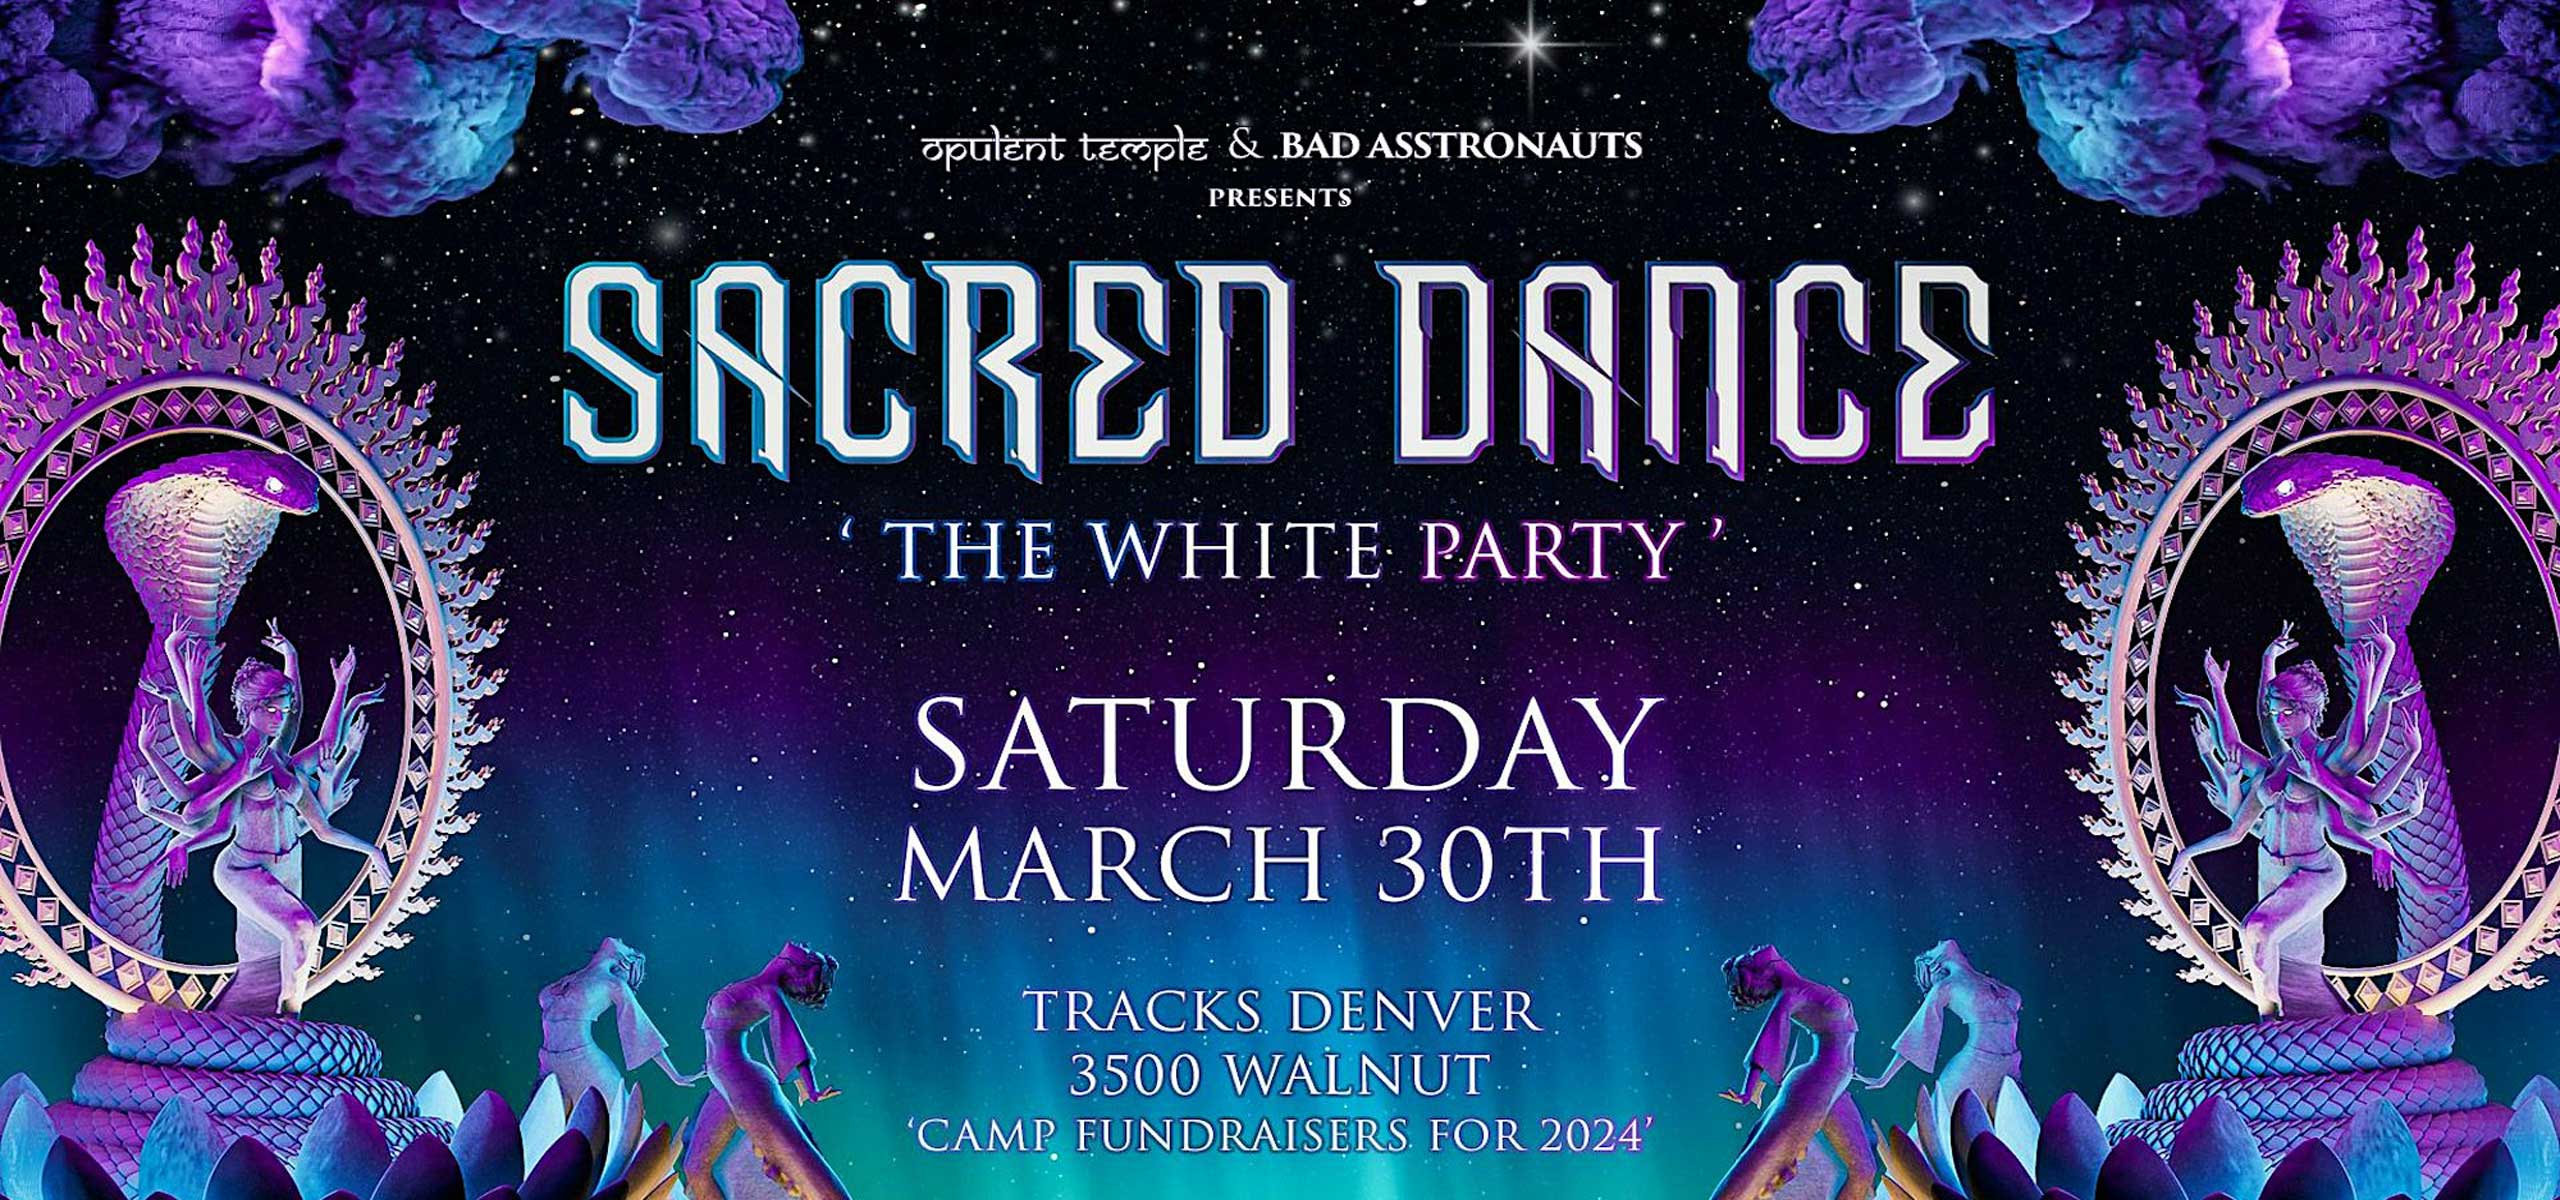 Opulent Temple & Bad Asstronauts : Sacred Dance (White Costume Party) Ft. Gabriel & Dresden